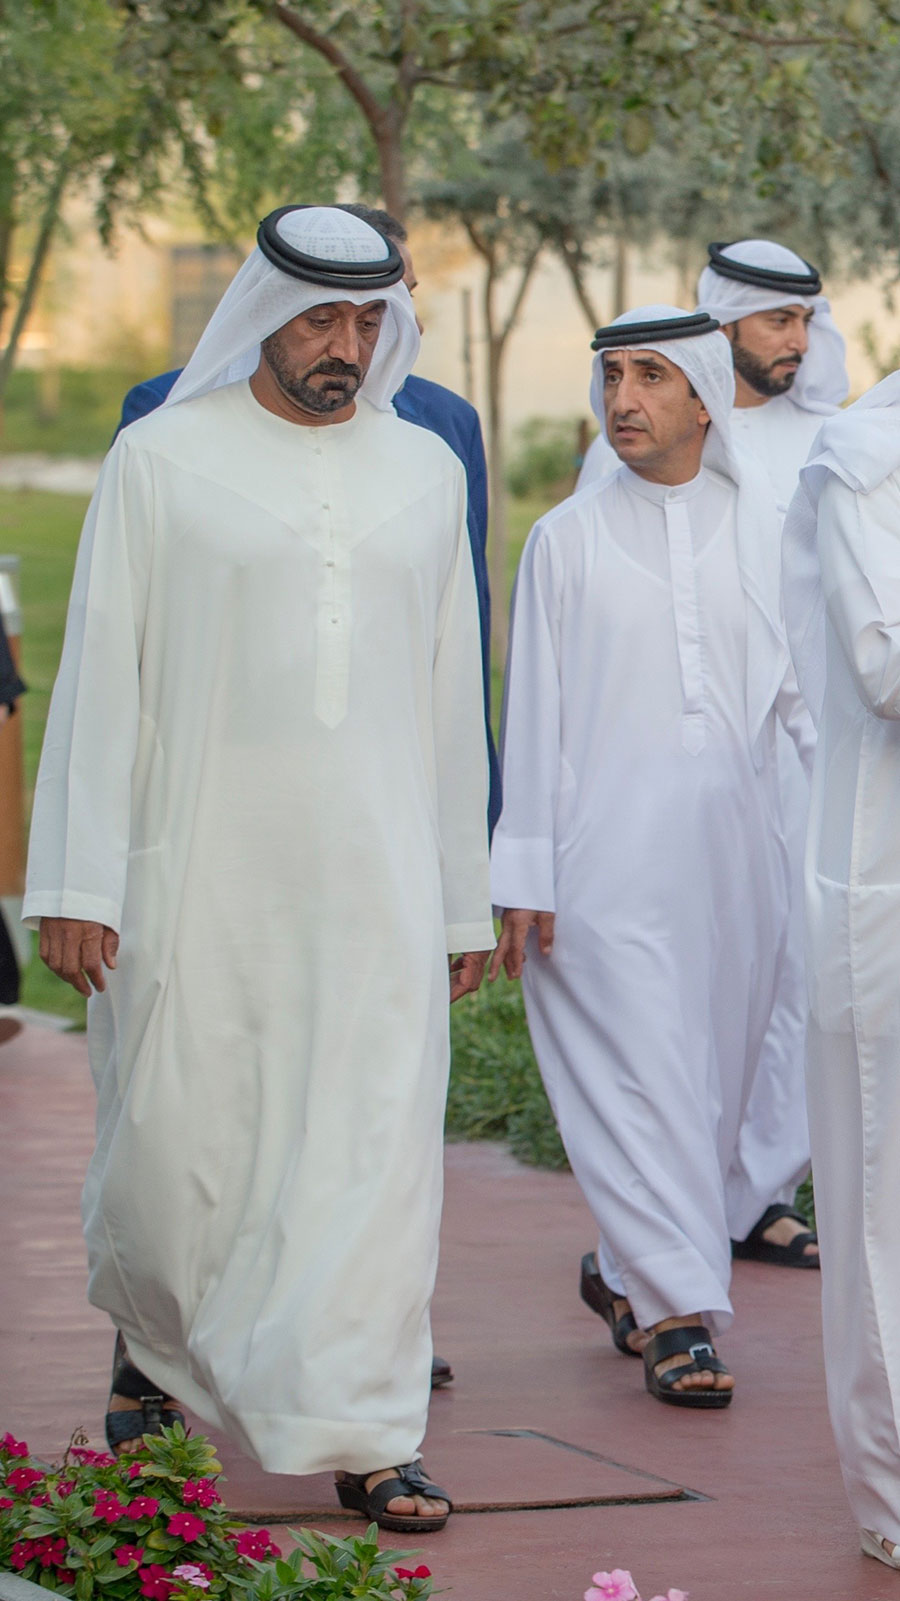 His Highness Sheikh Ahmad bin Saeed Al Maktoum